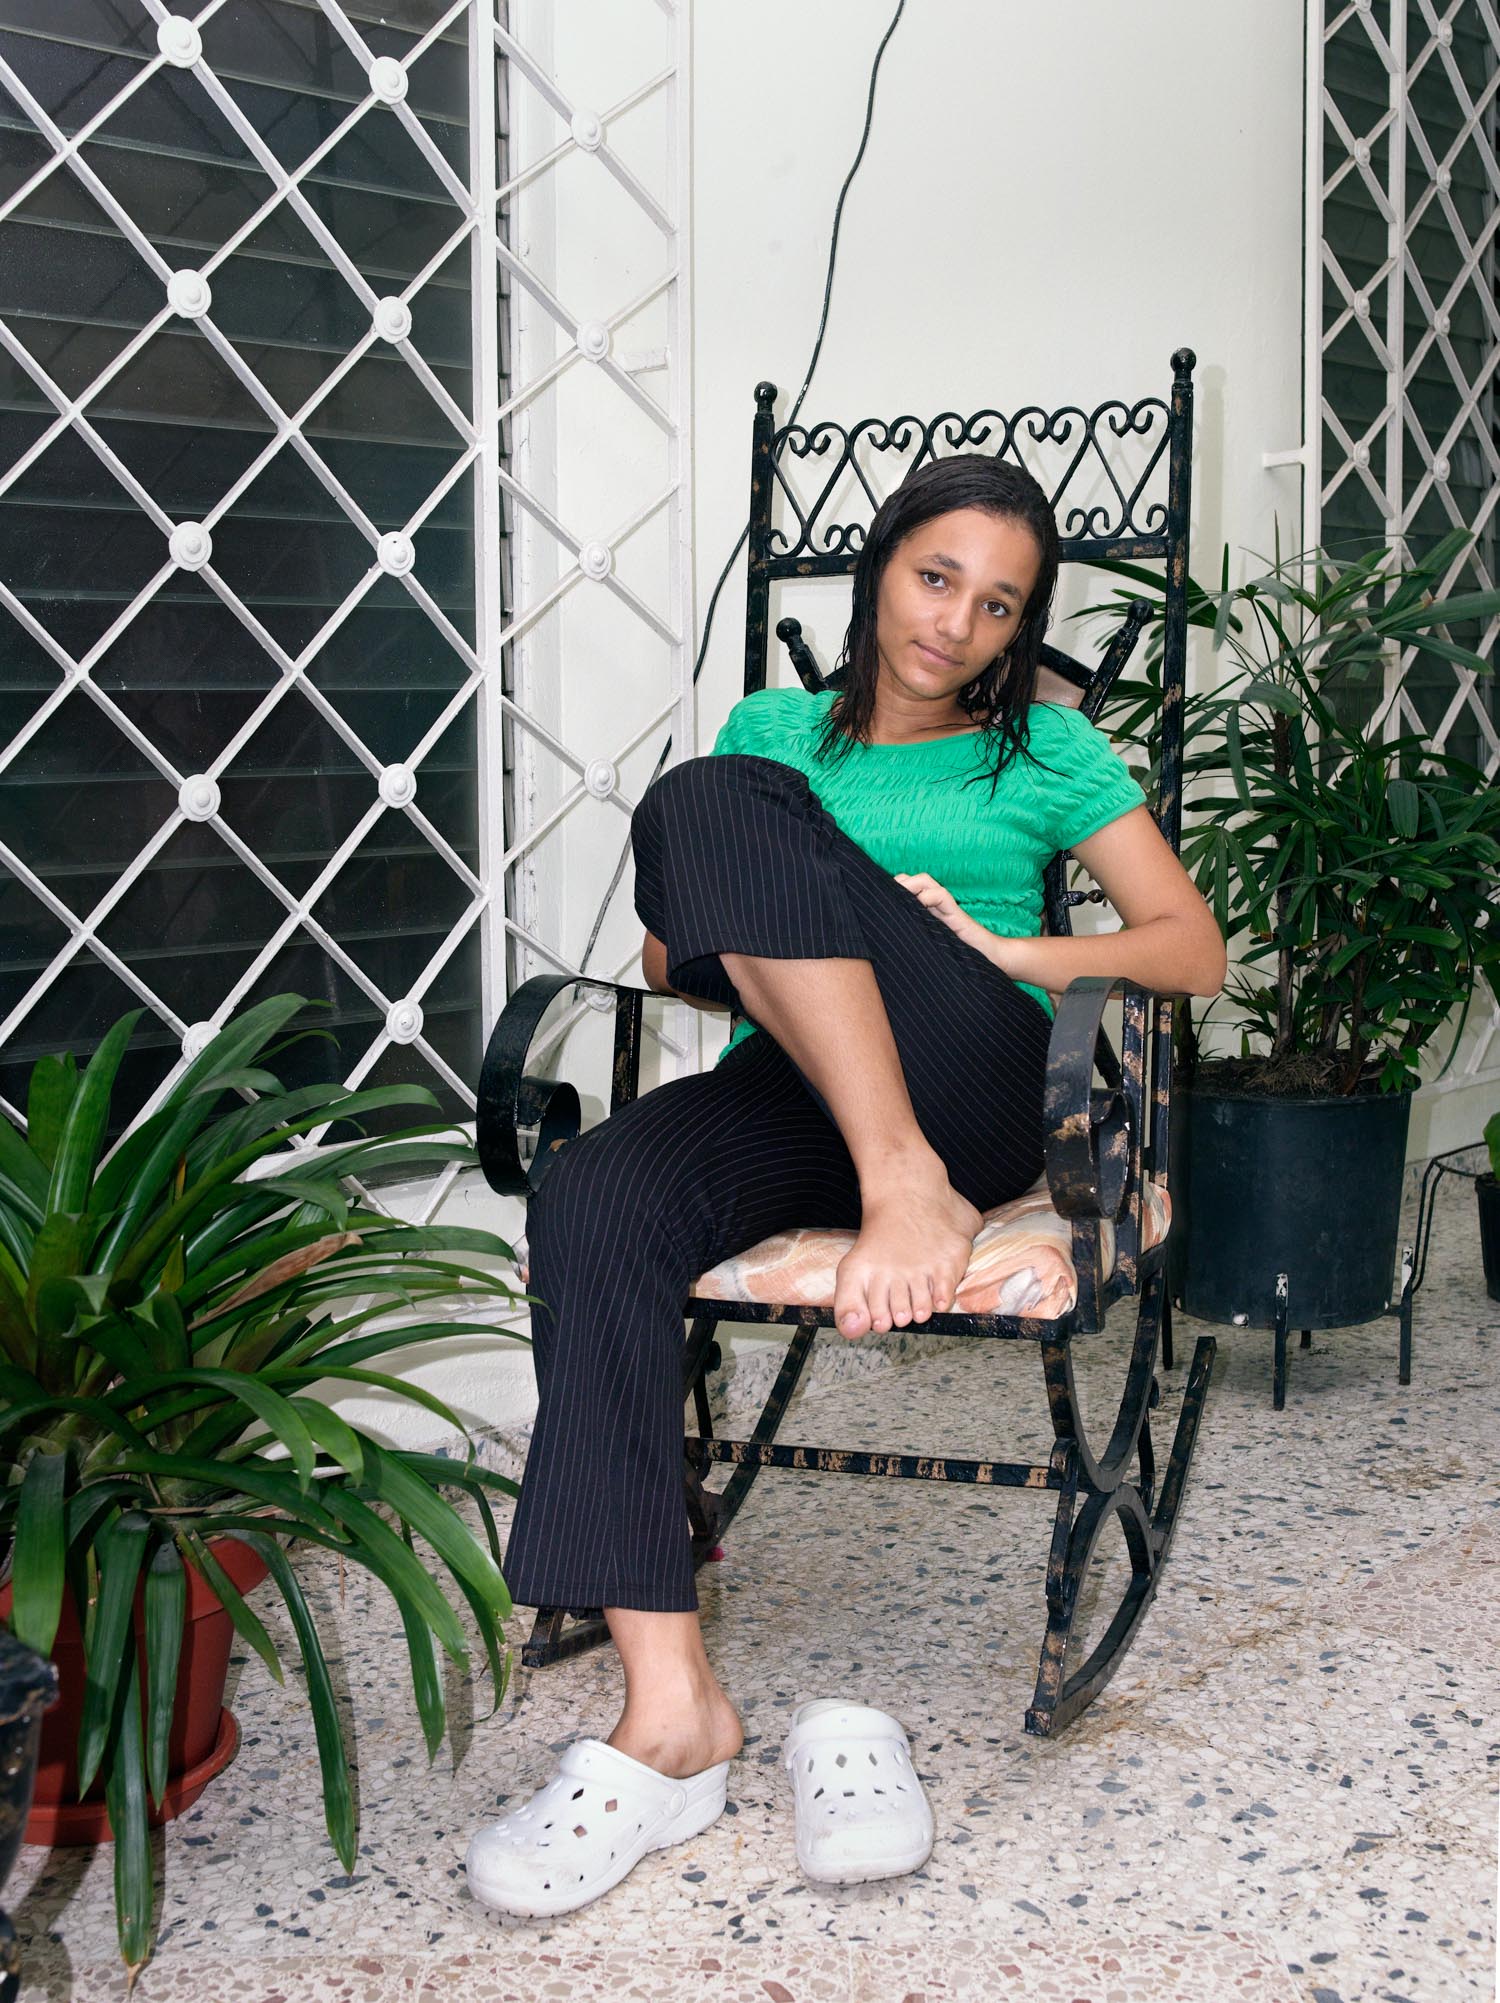 Laura on the Porch, 2008. Gazcue, Santo Domingo, R.D.